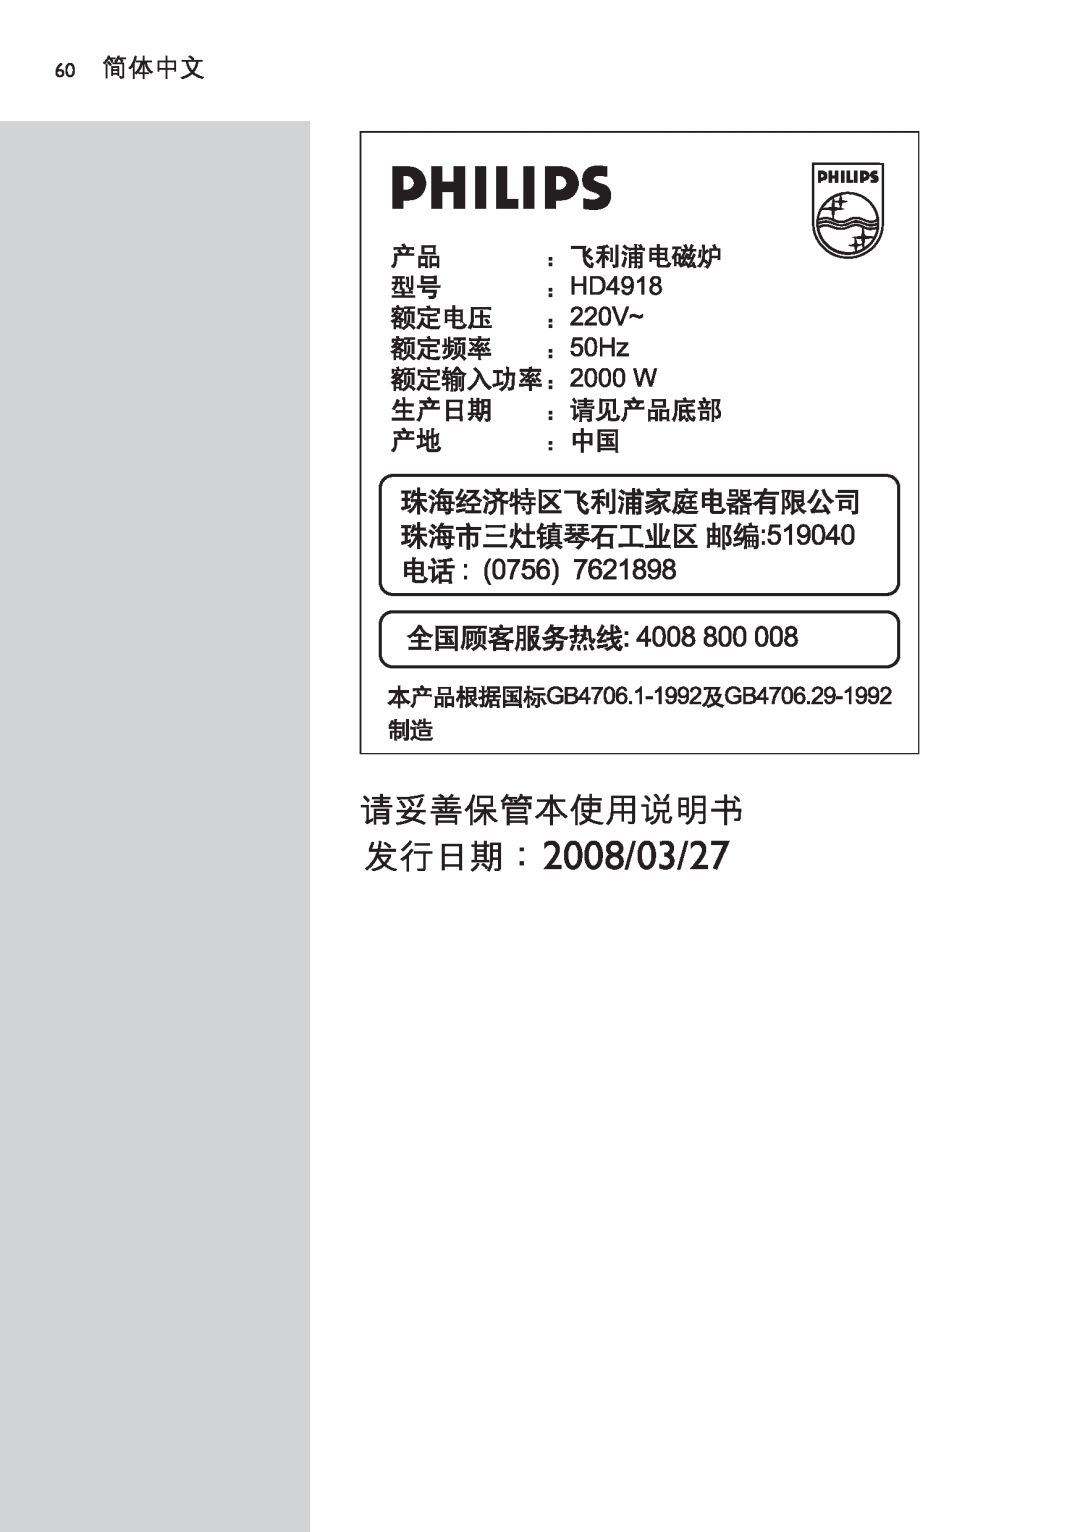 Philips HD4918 manual 2008/03/27, 60 简体中文 